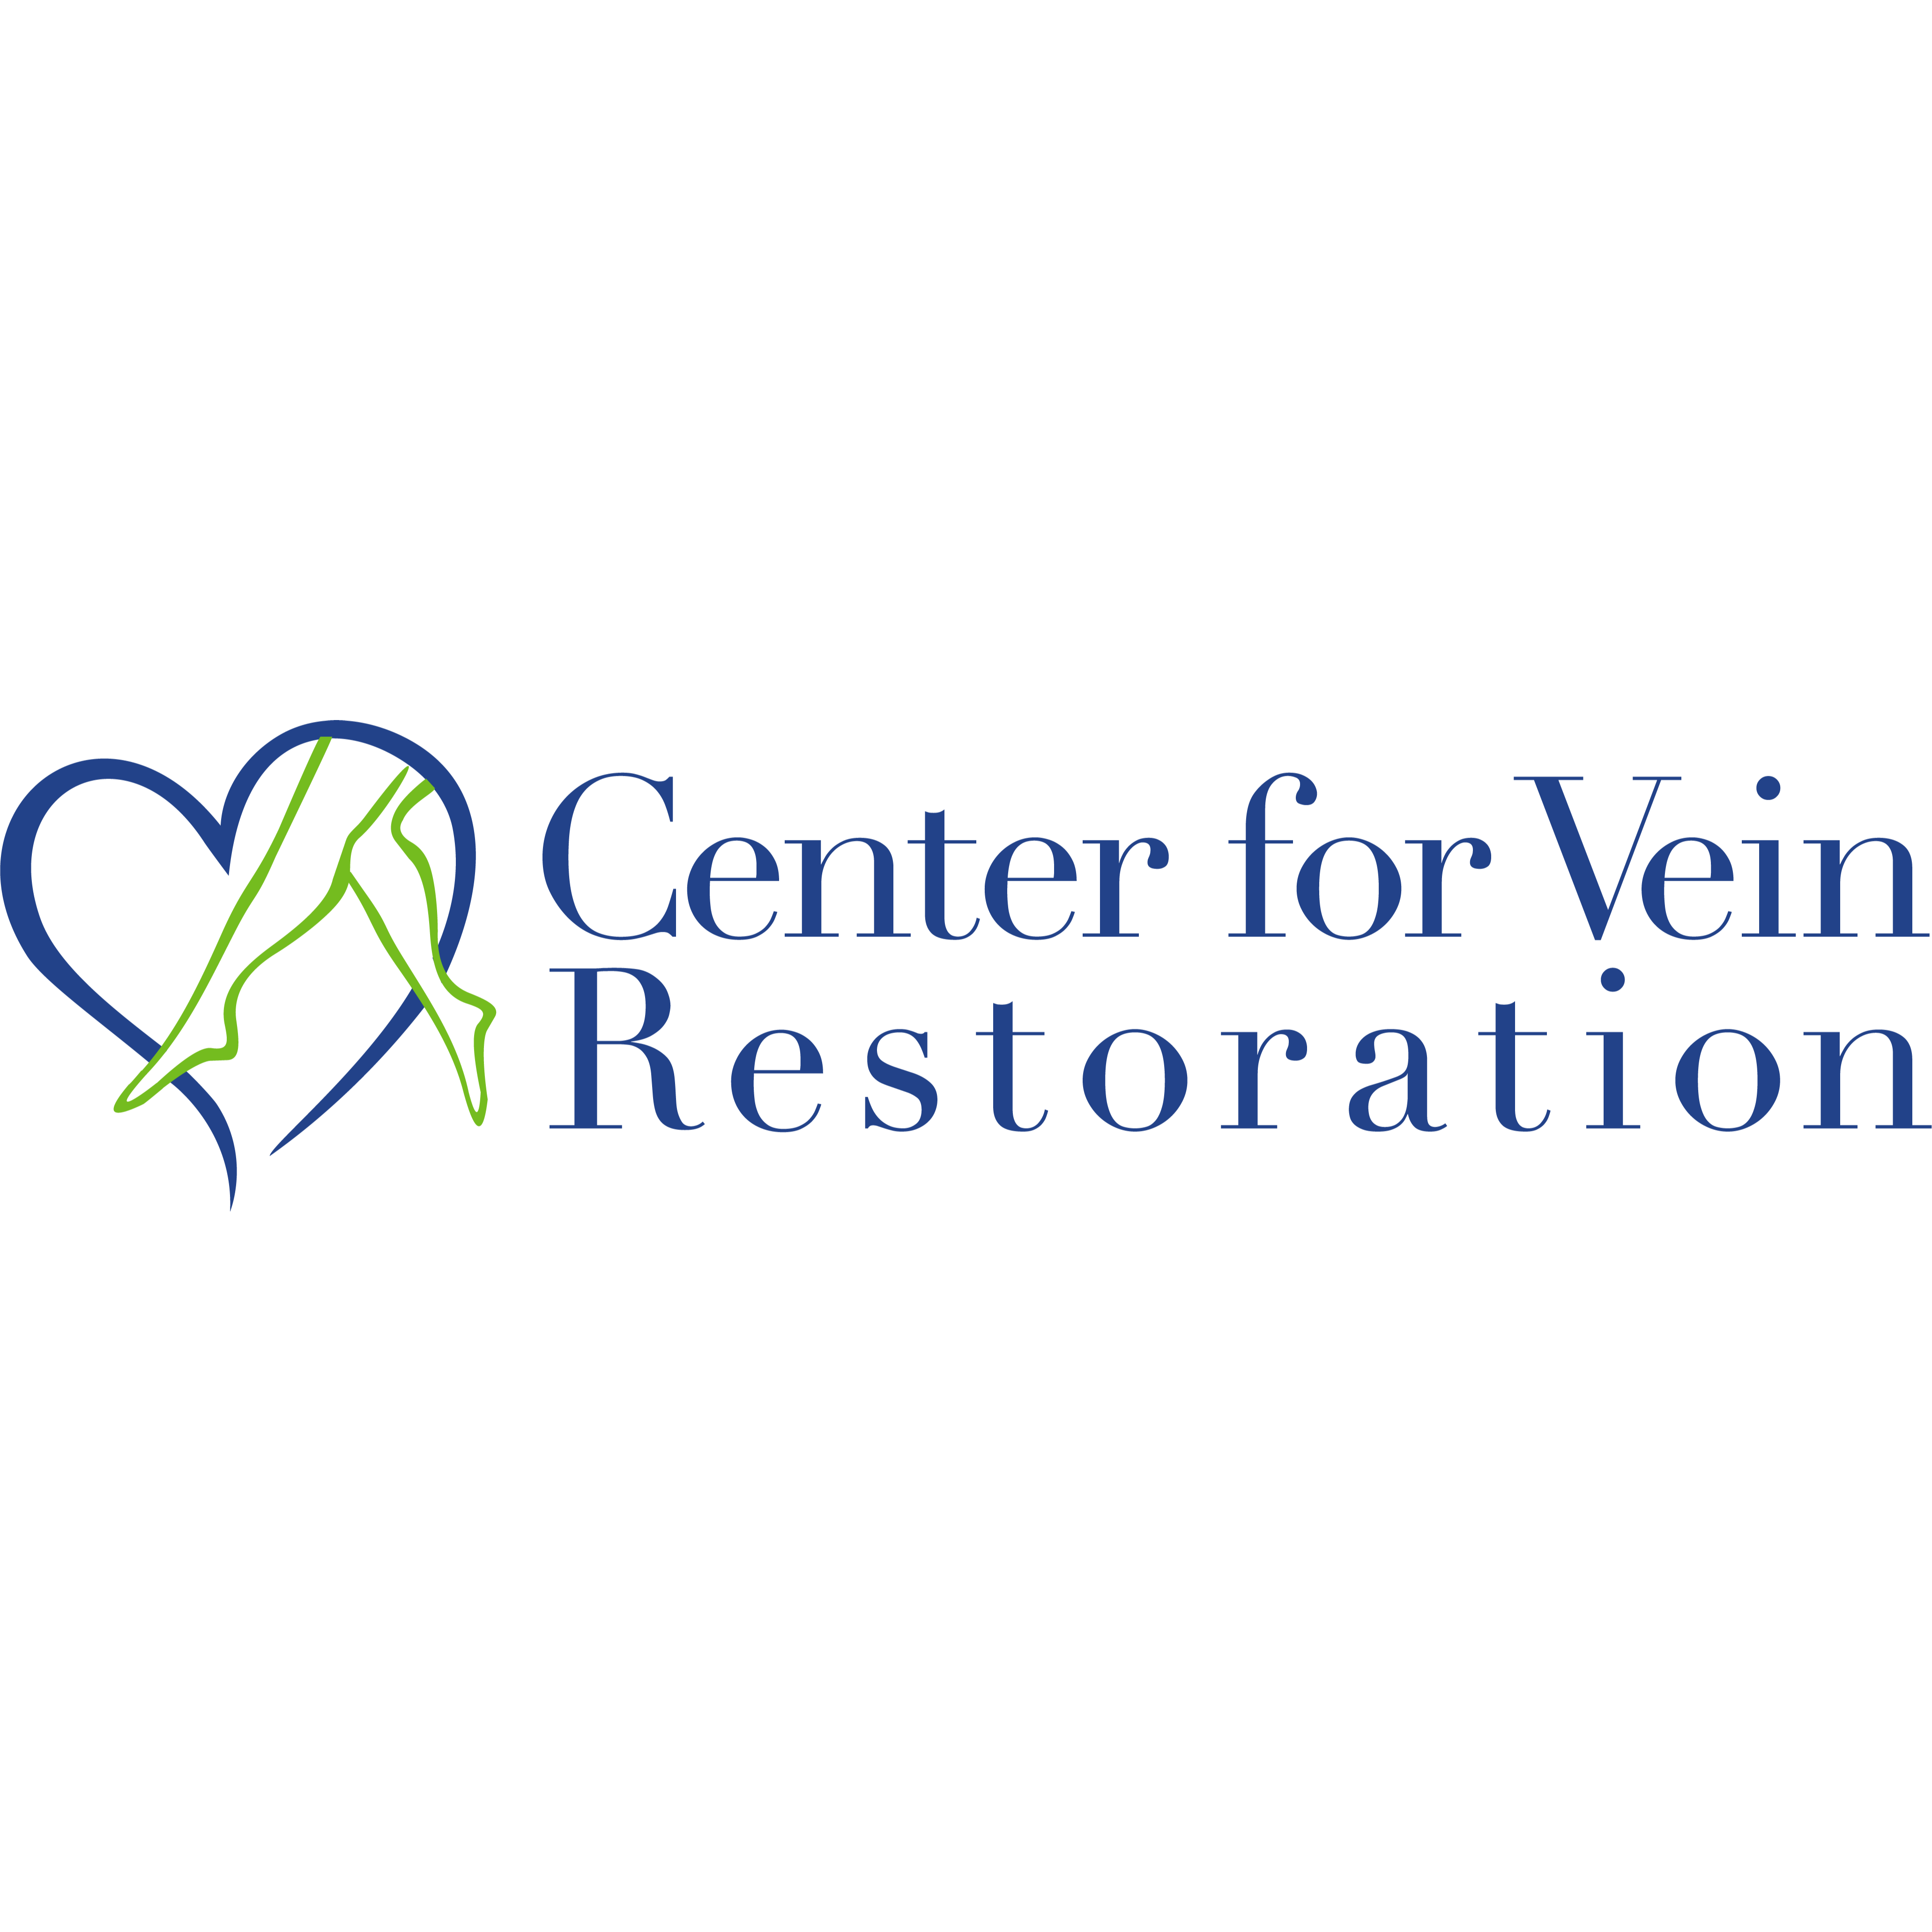 Center for Vein Restoration | Dr. Lawrence Markovitz - McLean, VA 22102 - (703)634-4458 | ShowMeLocal.com